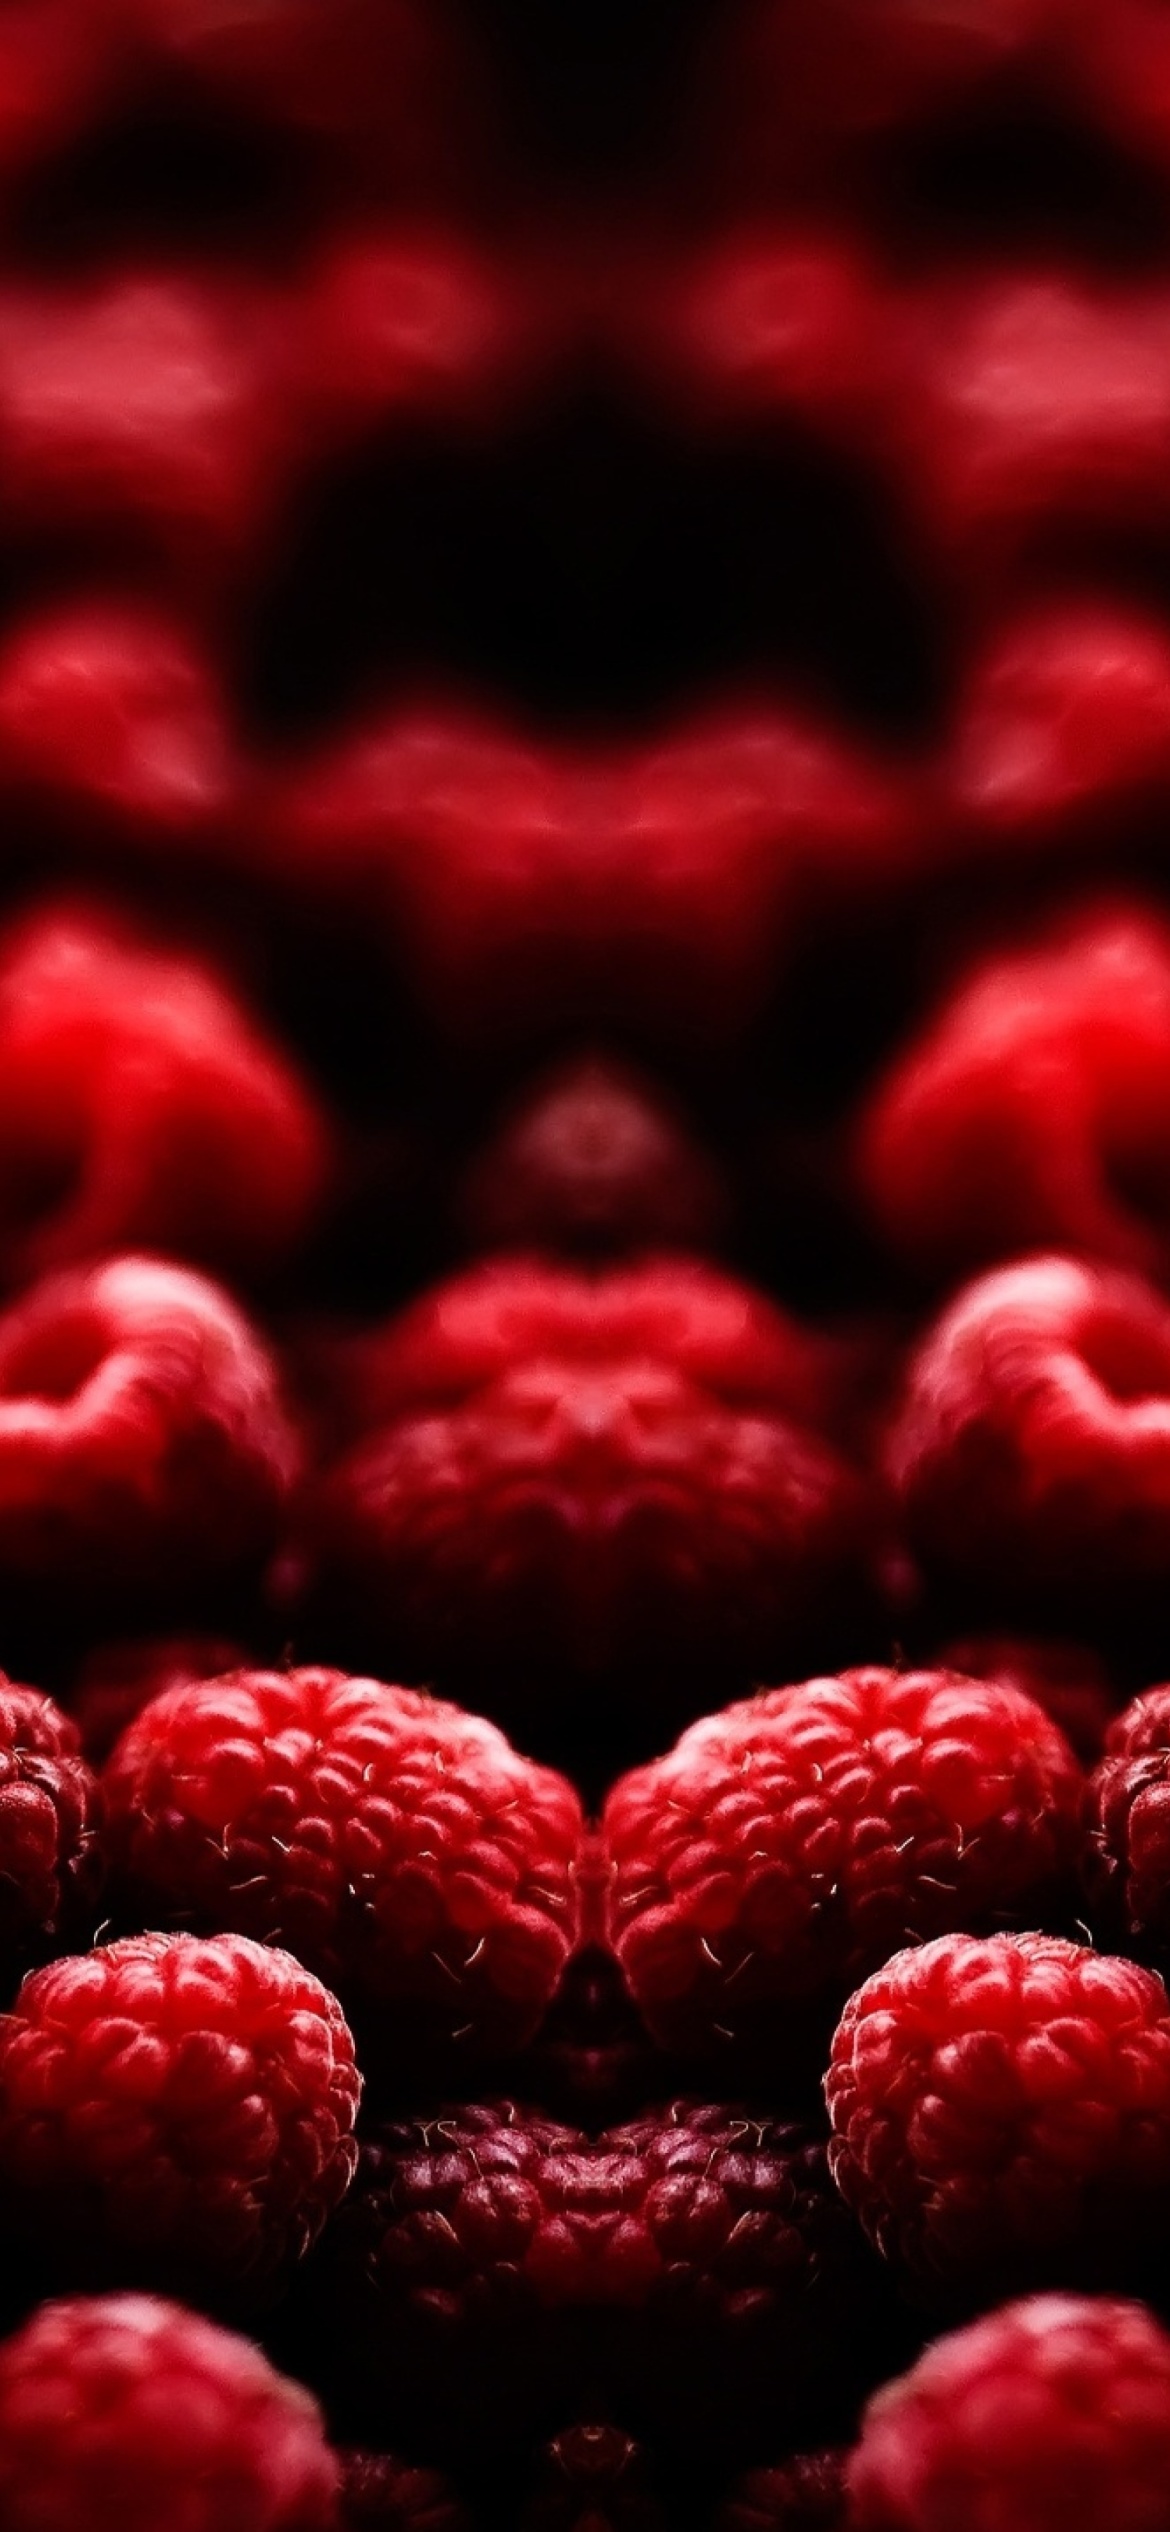 Appetizing Raspberries wallpaper 1170x2532